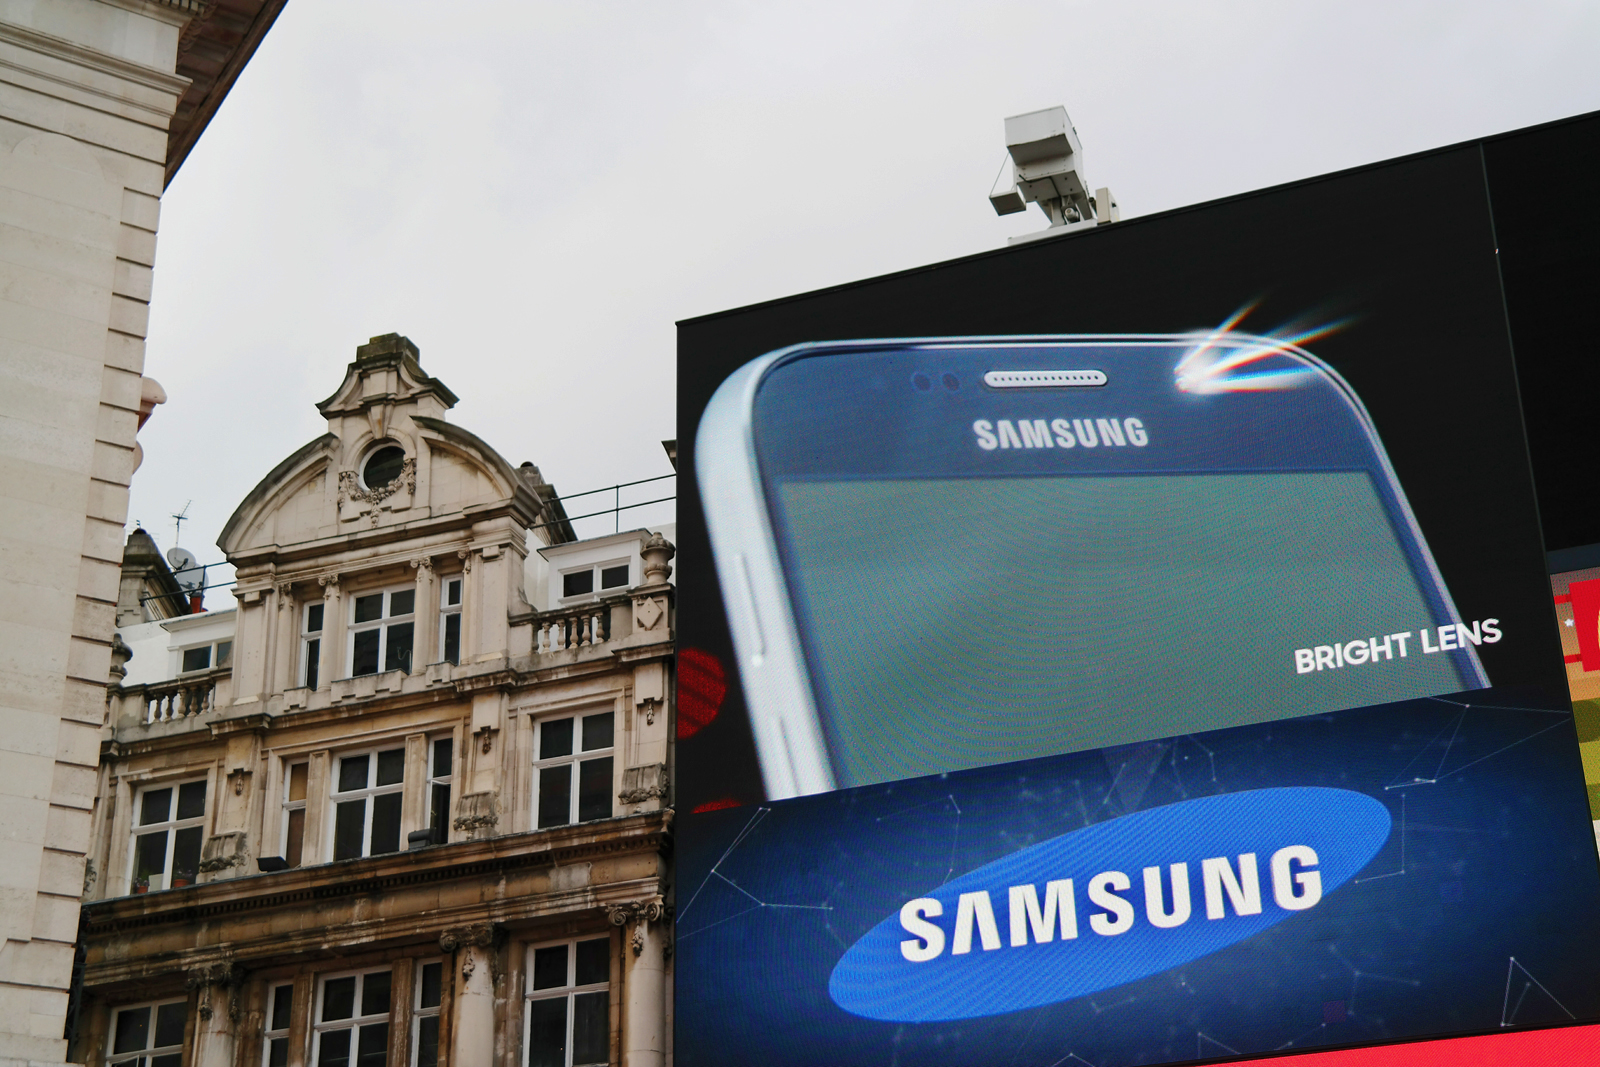 Samsung Galaxy S6 Edge smartphone bright lens Picadilly Circus advertising screens London street Londres publicités sur écran capteur 16 megapixels photo by United States of Paris blog